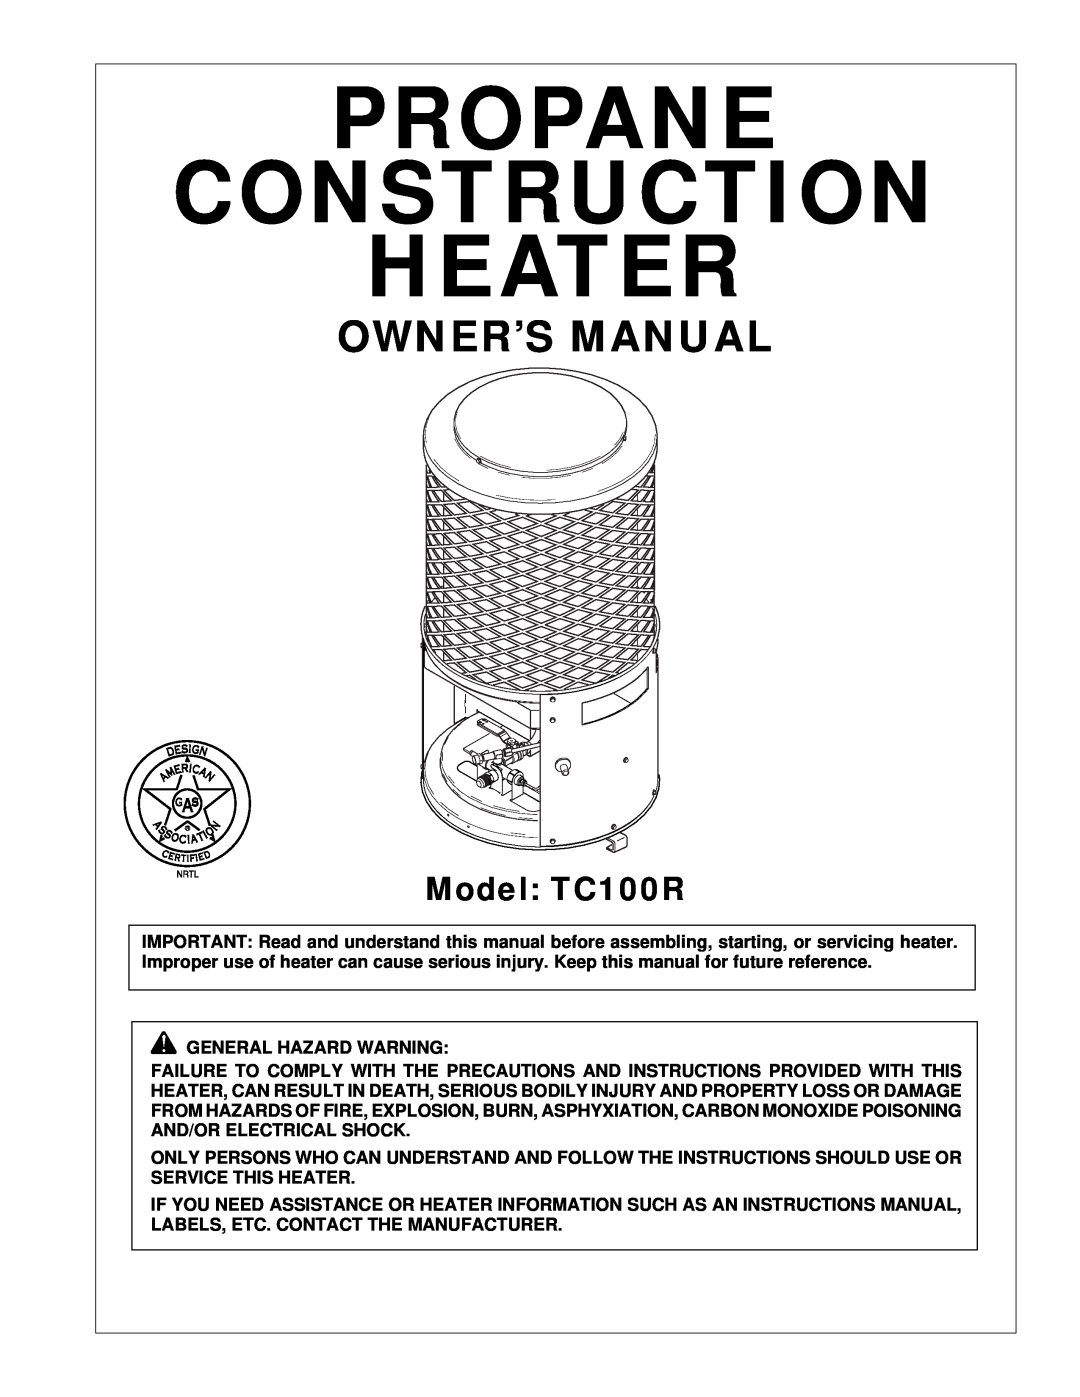 Desa owner manual Model TC100R, Propane Construction Heater 